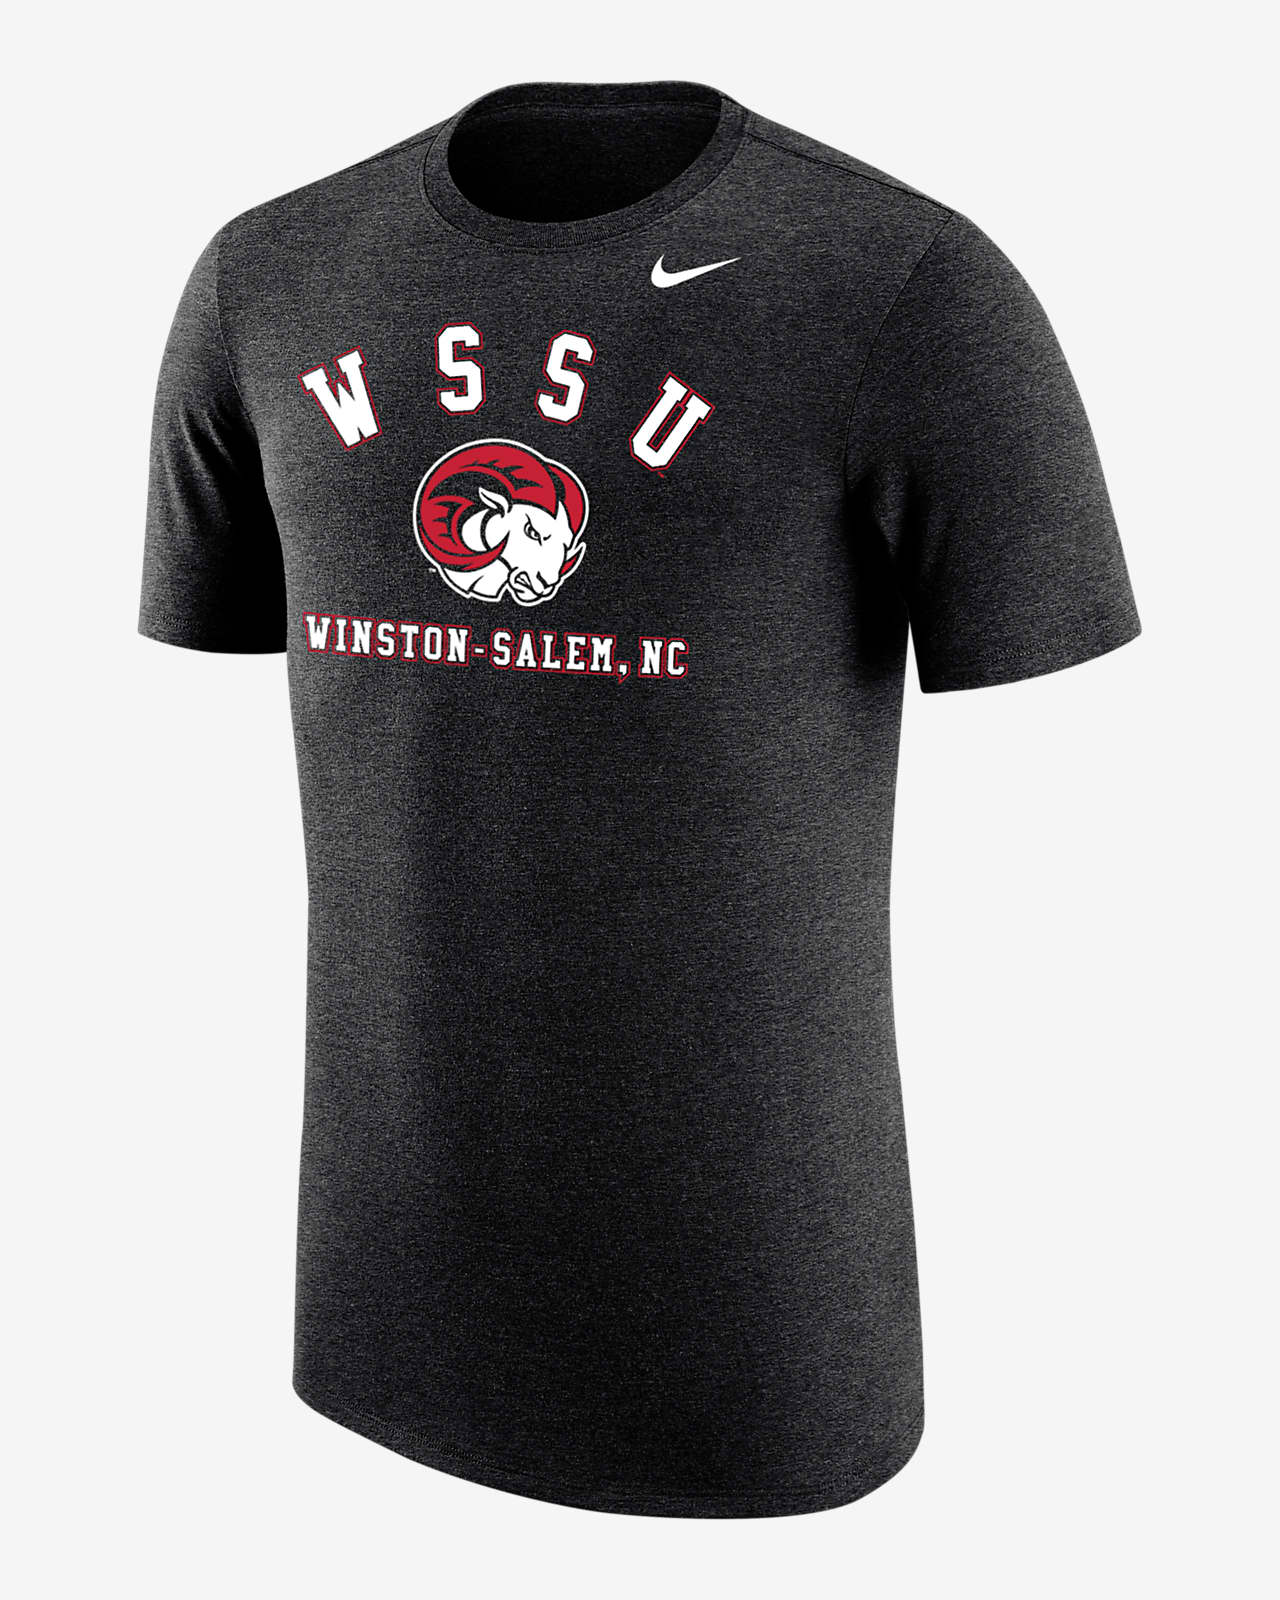 Winston-Salem Men's Nike College T-Shirt